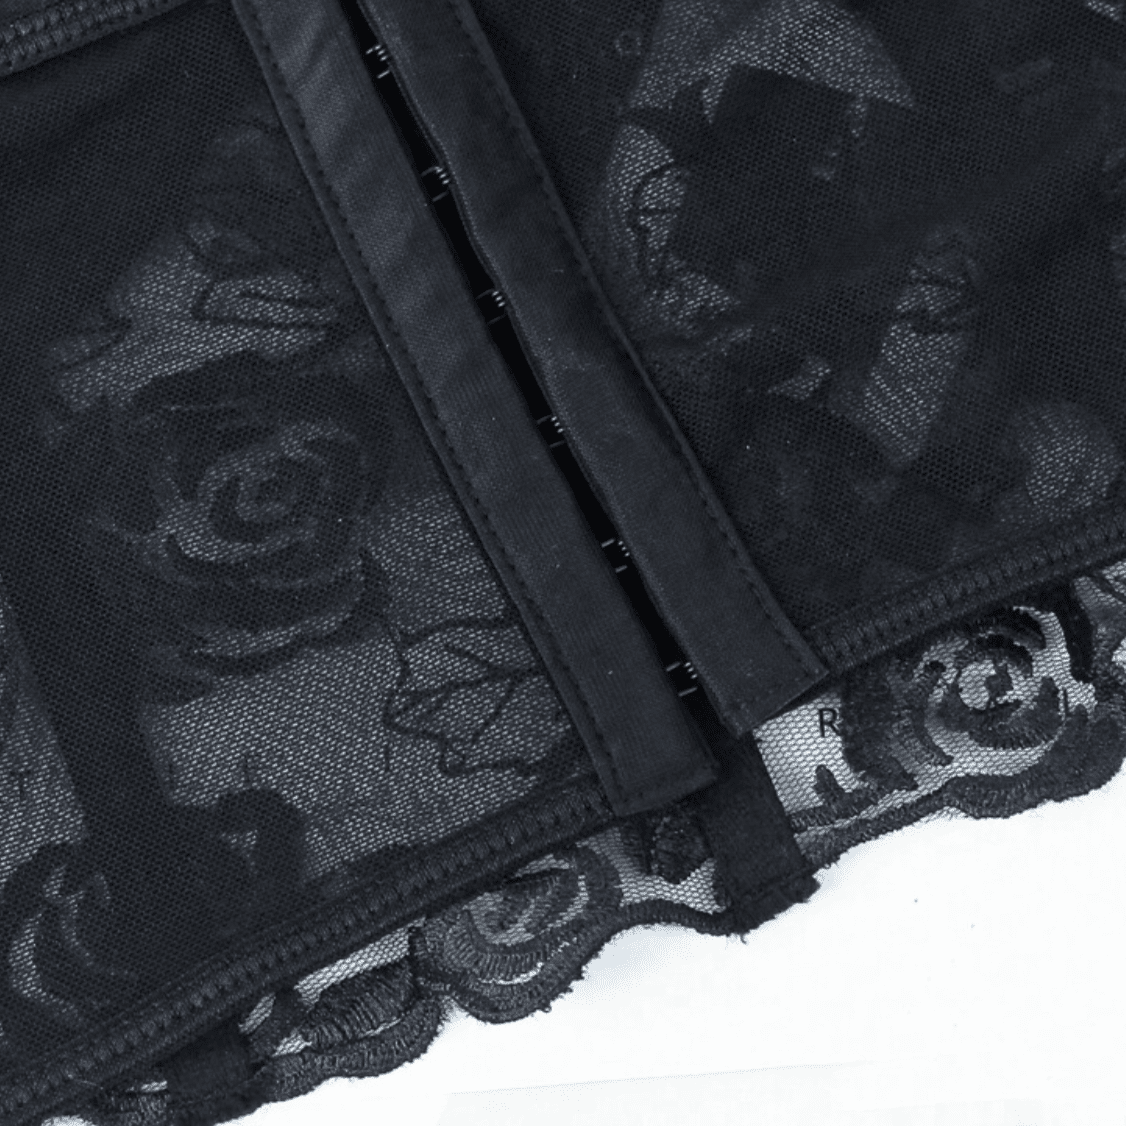 black lace corset sheer